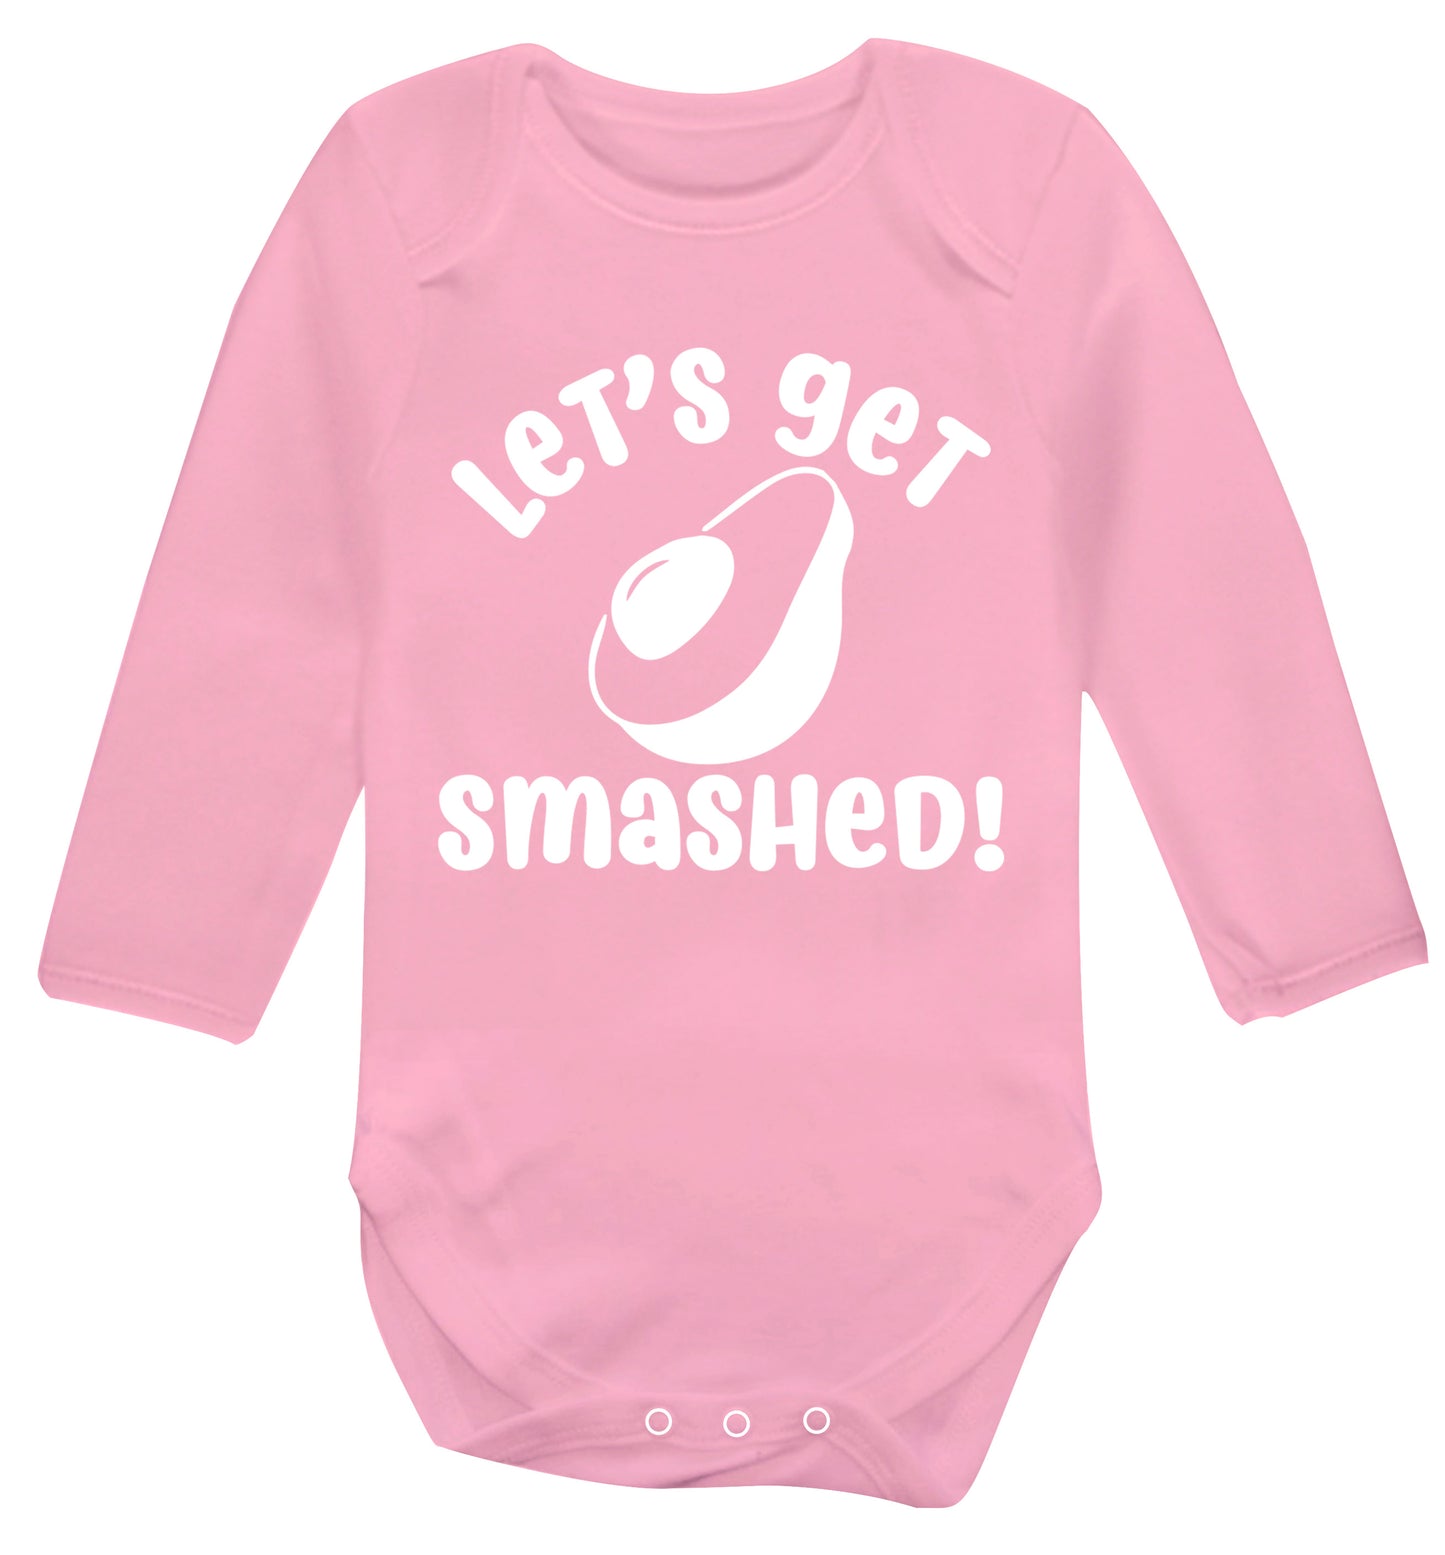 Let's get smashed Baby Vest long sleeved pale pink 6-12 months